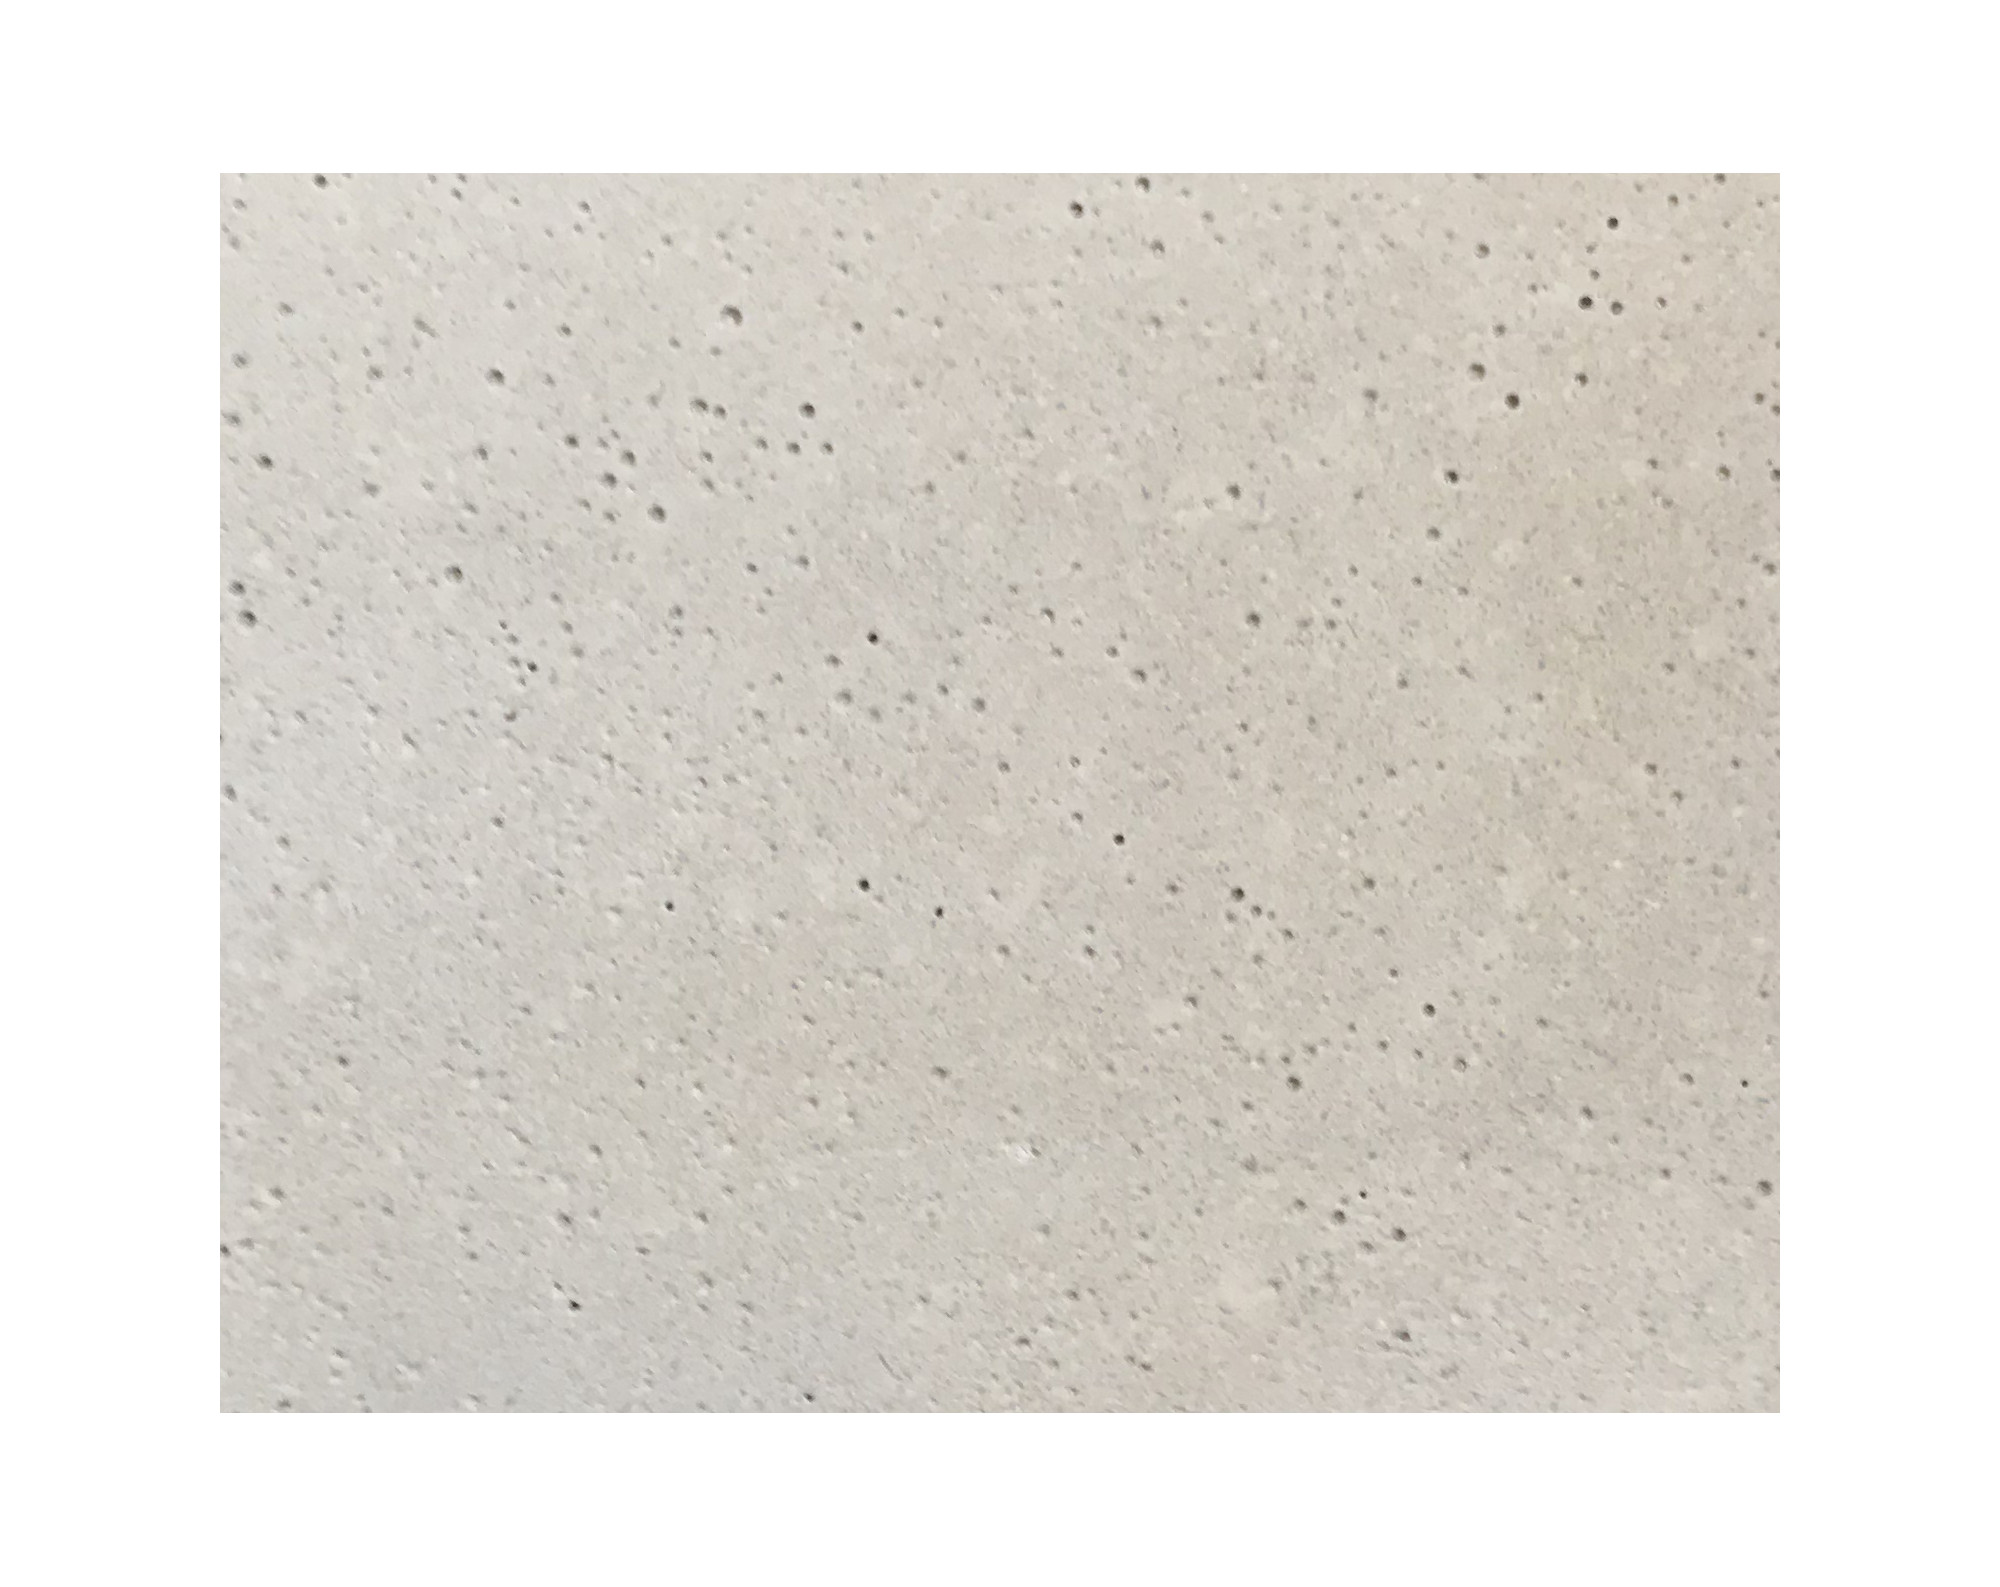 Harmo roc spartaset, olympia-serie, 8-vormig d:4,20mx6,60m, indisch wit, beton